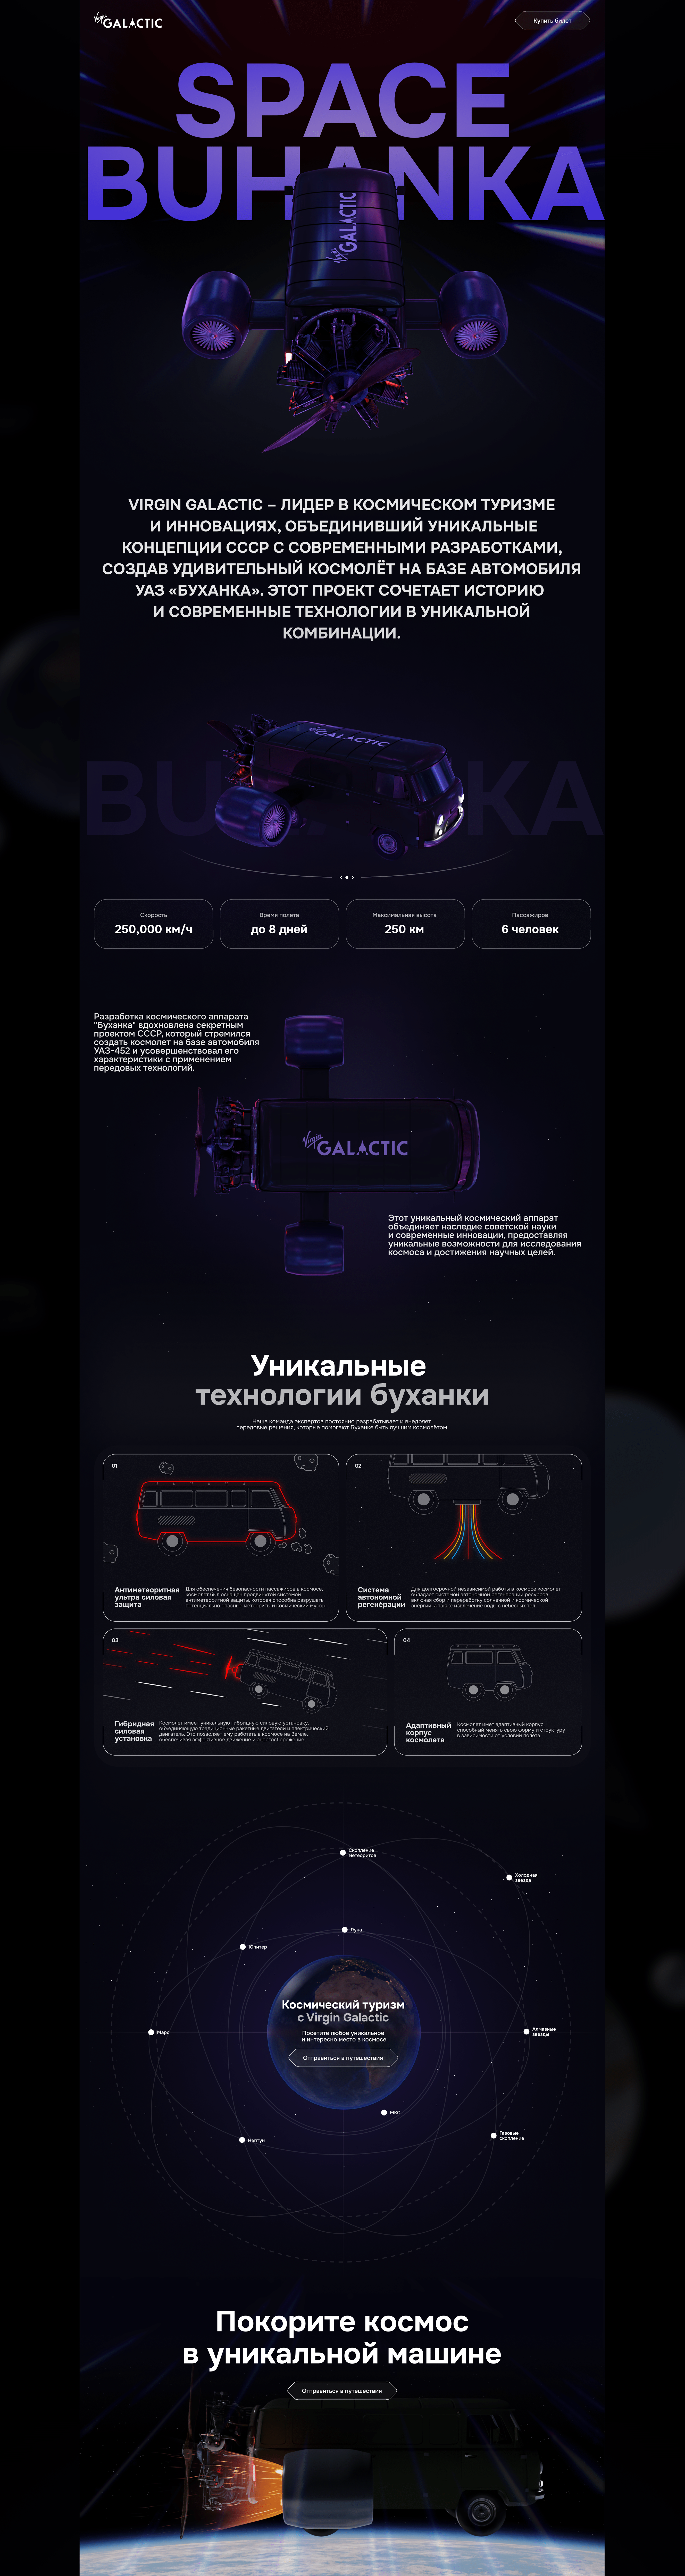 Virgin Galactic x УАЗ|Pyrobattle — Изображение №4 — Интерфейсы, 3D на Dprofile